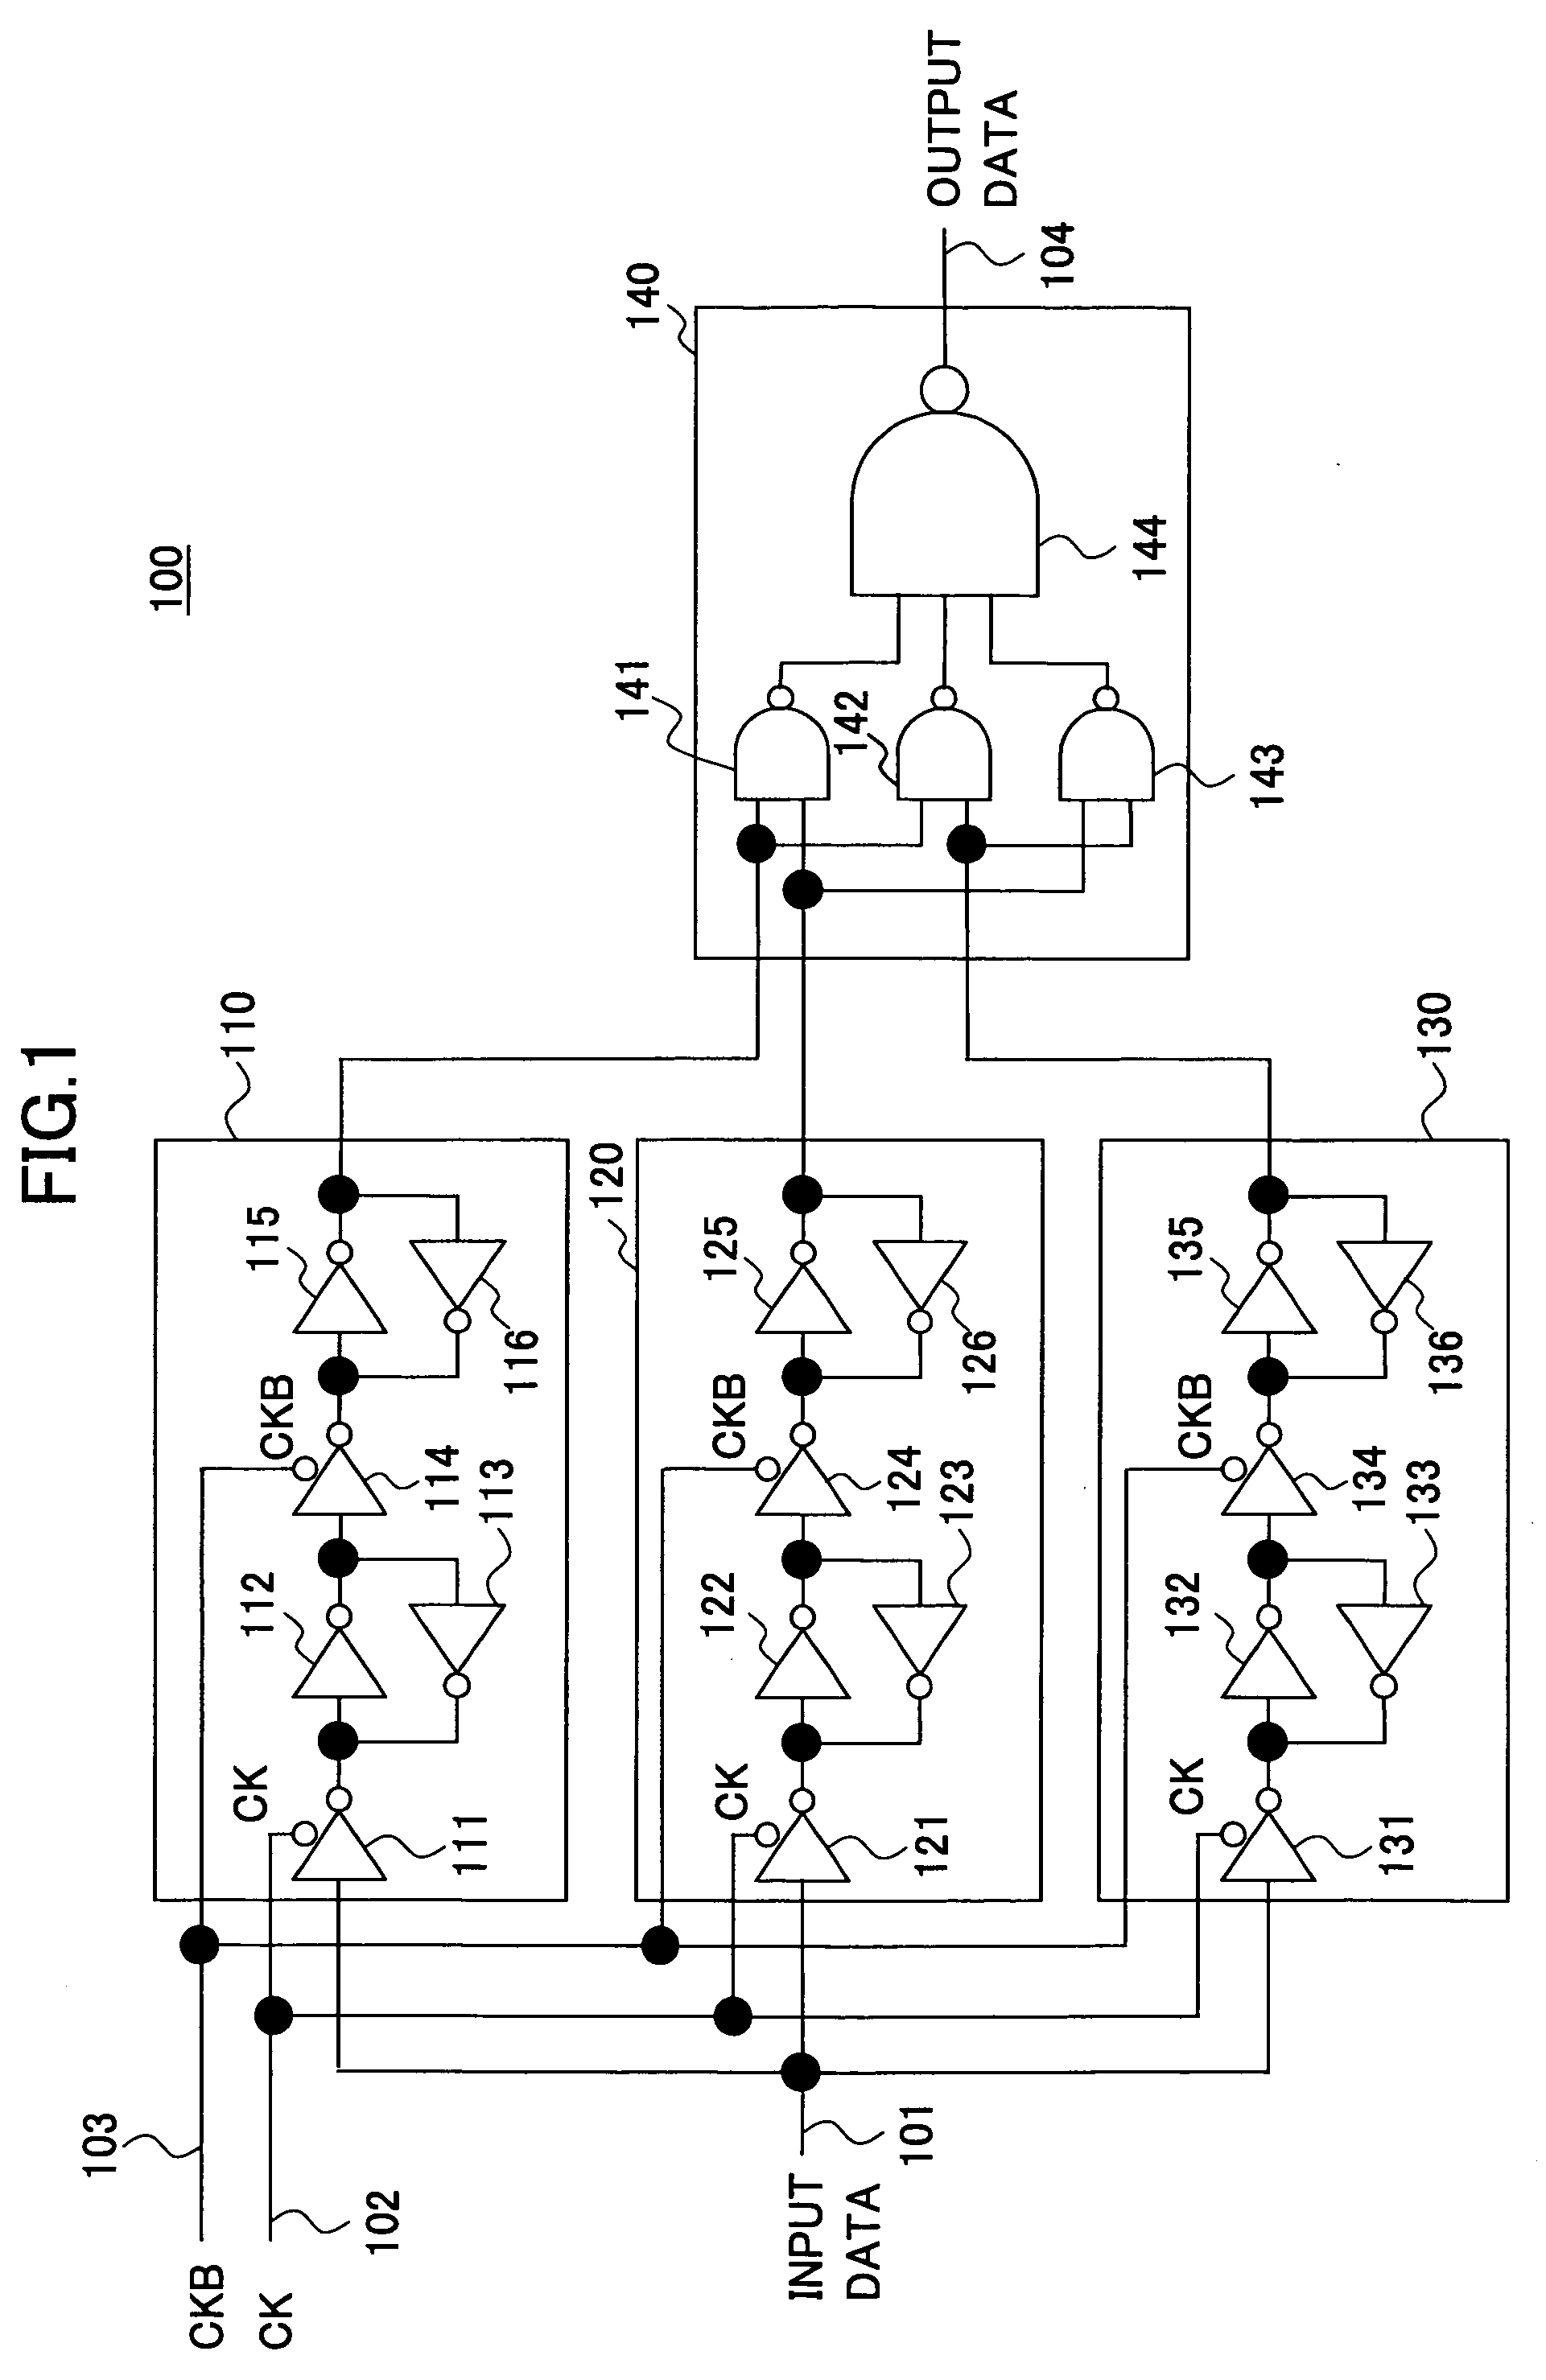 Flip-flop circuit having majority-logic circuit